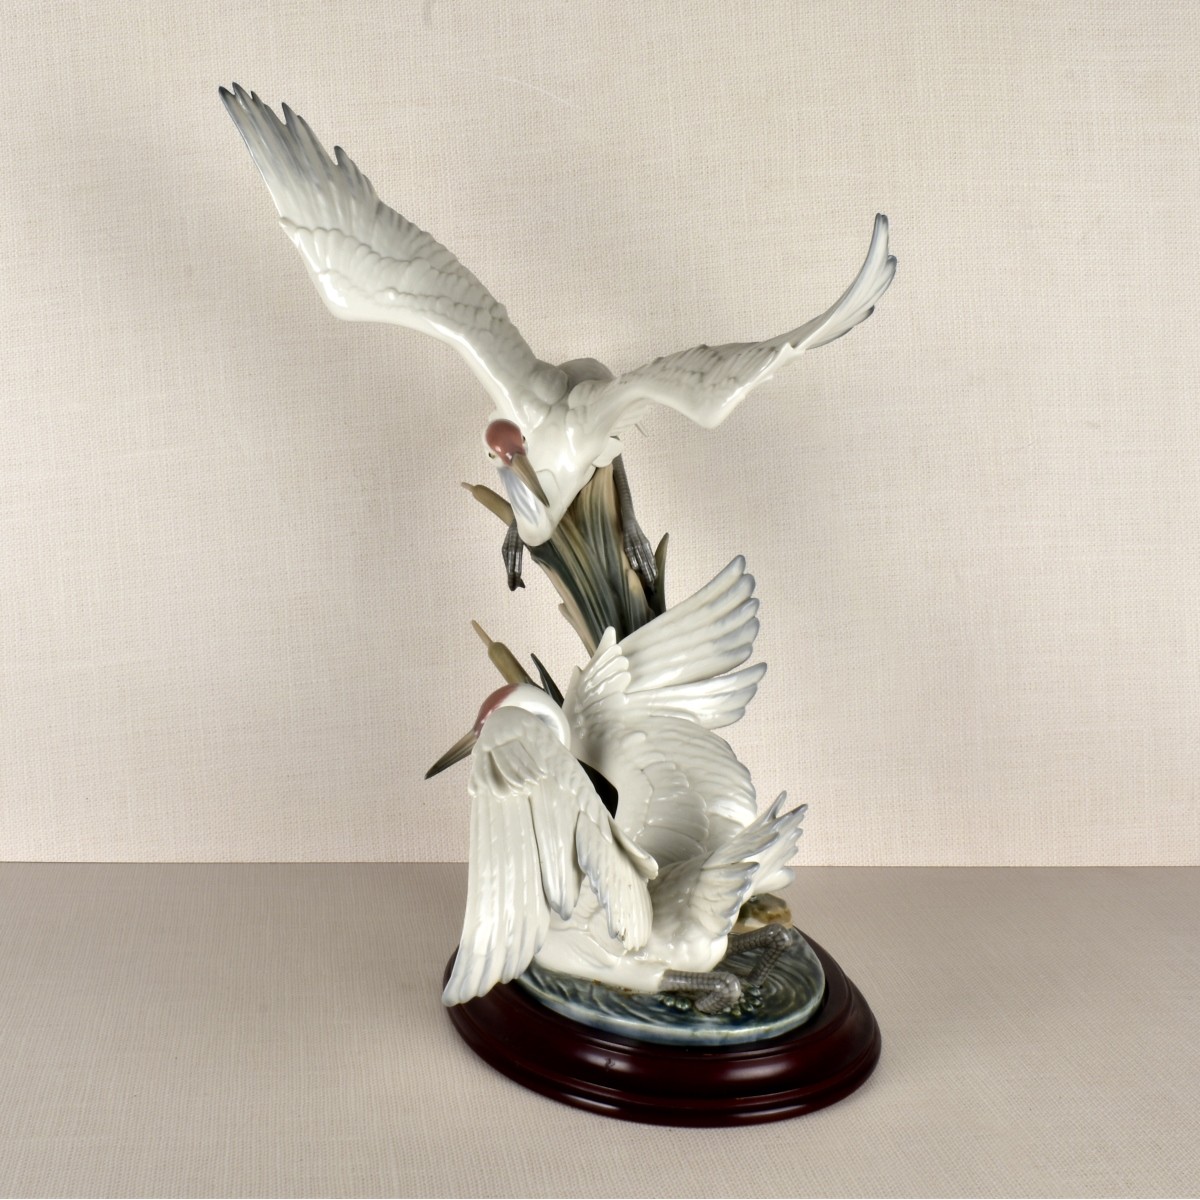 Lladro "Courting Cranes" Figurine